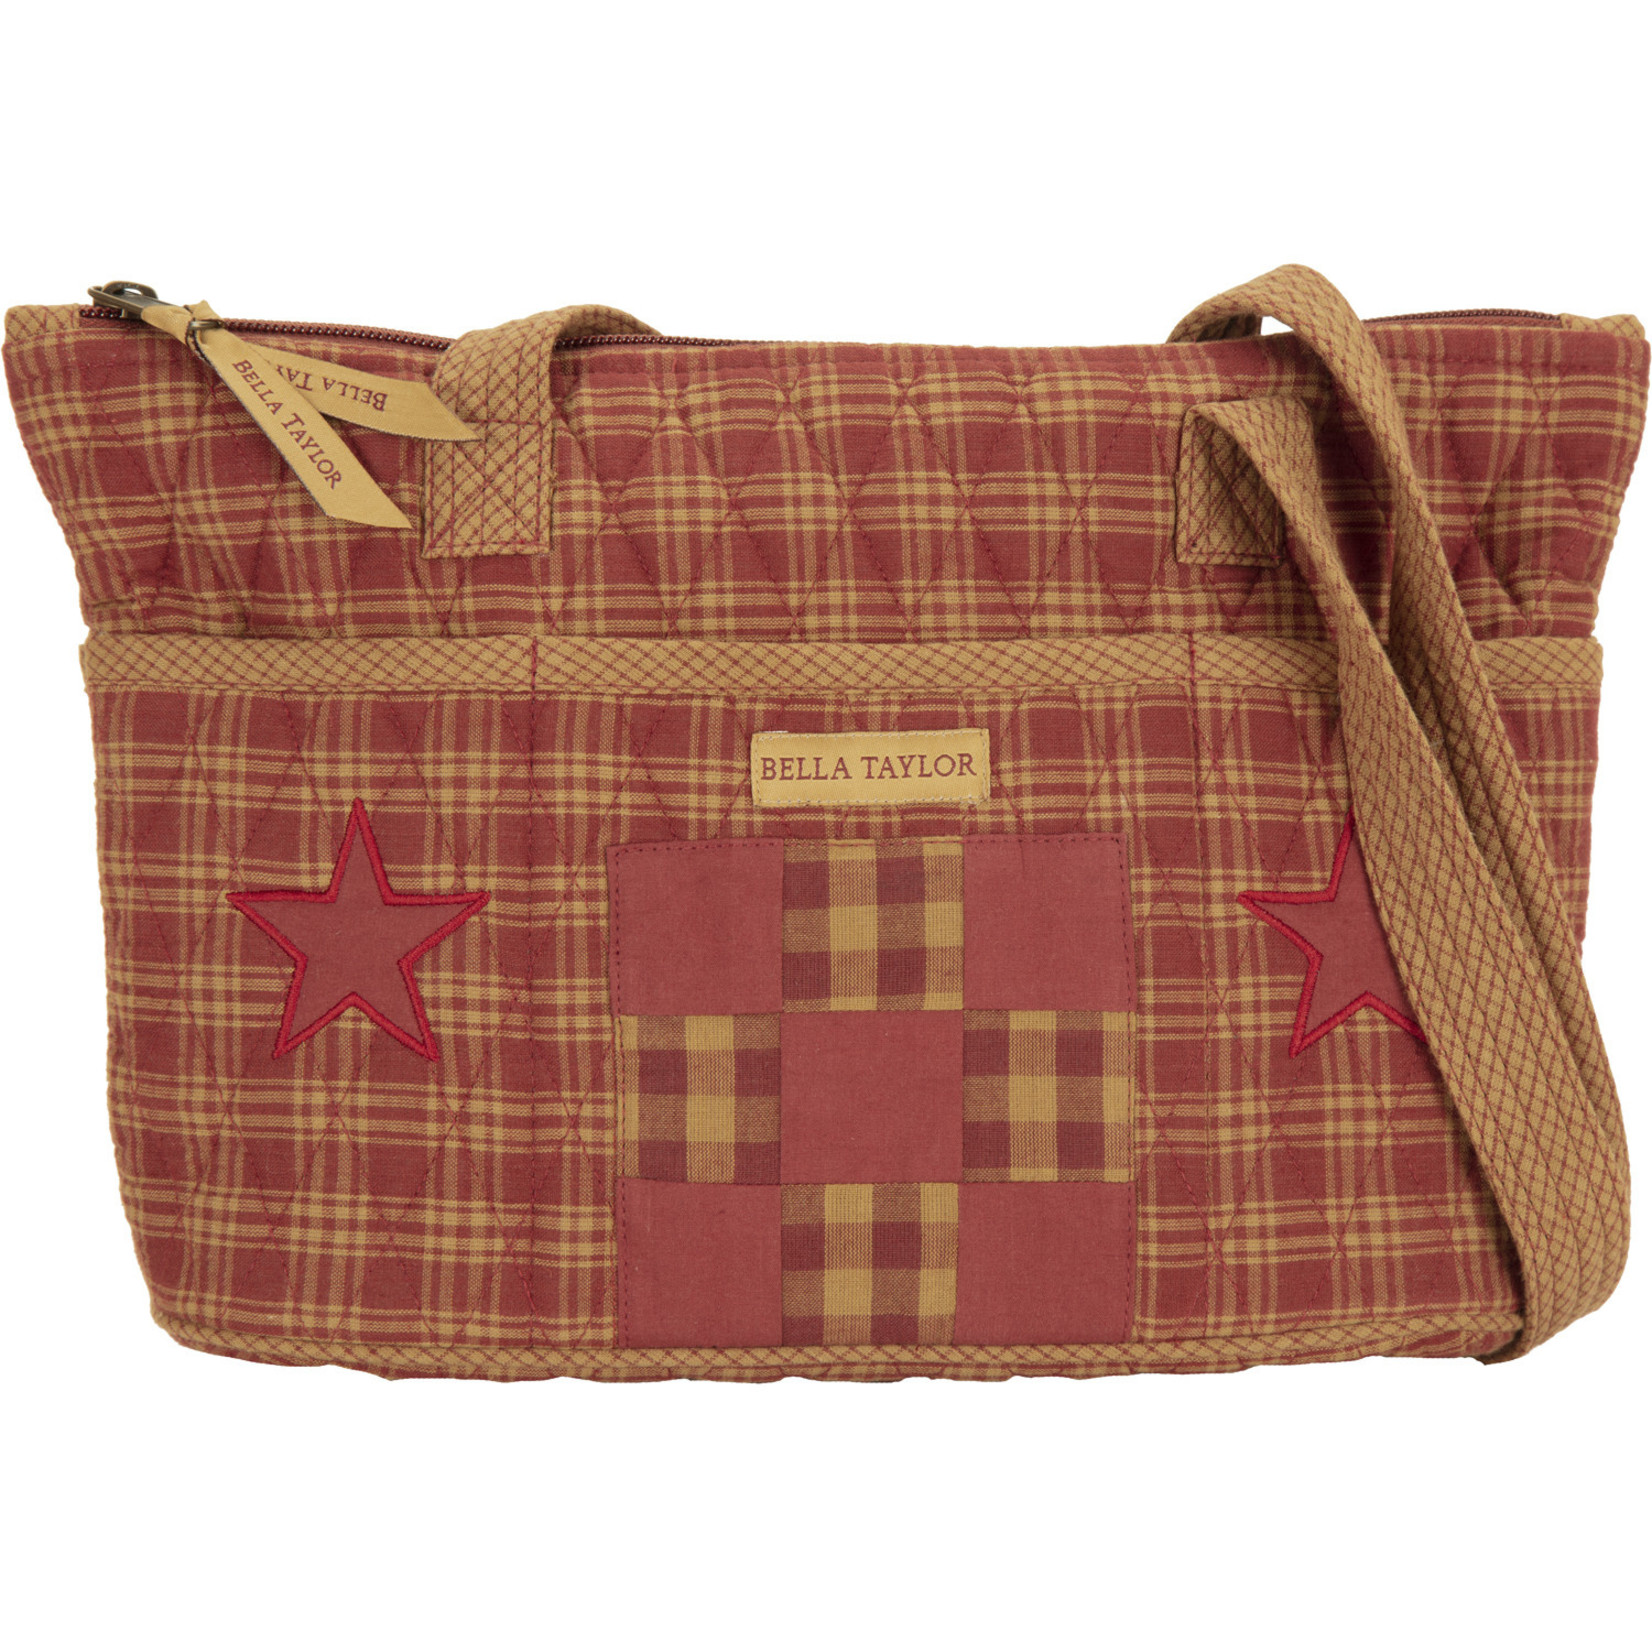 Bella Taylor Ninepatch Star - Taylor handbag